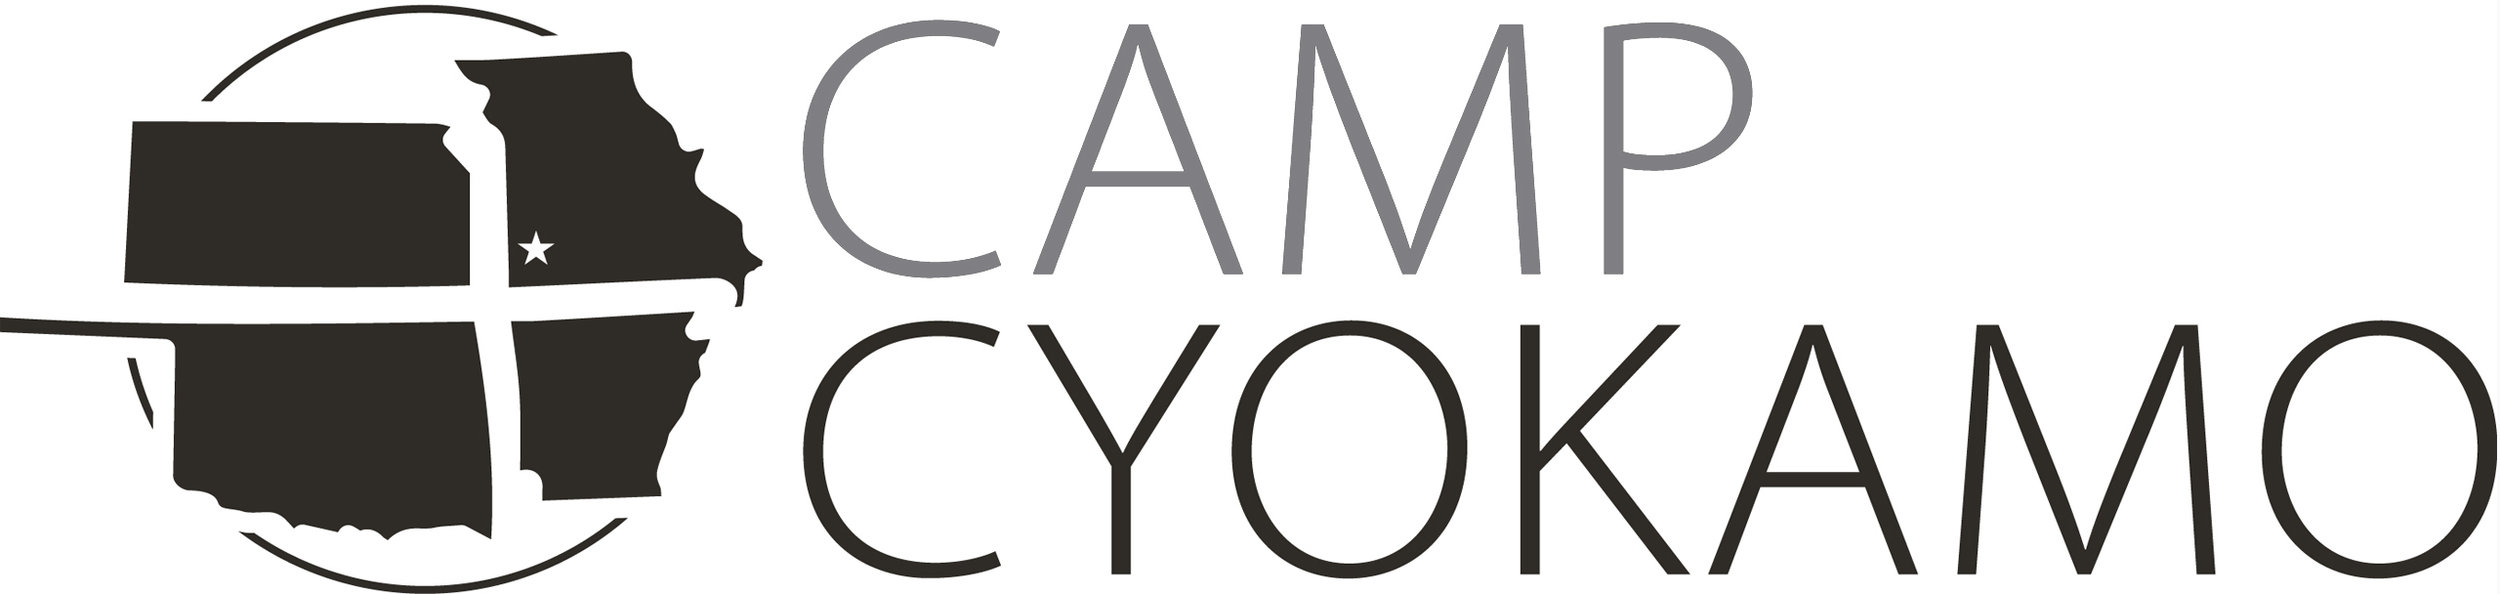 Camp Cyokamo Stacked (gray) w star.jpg